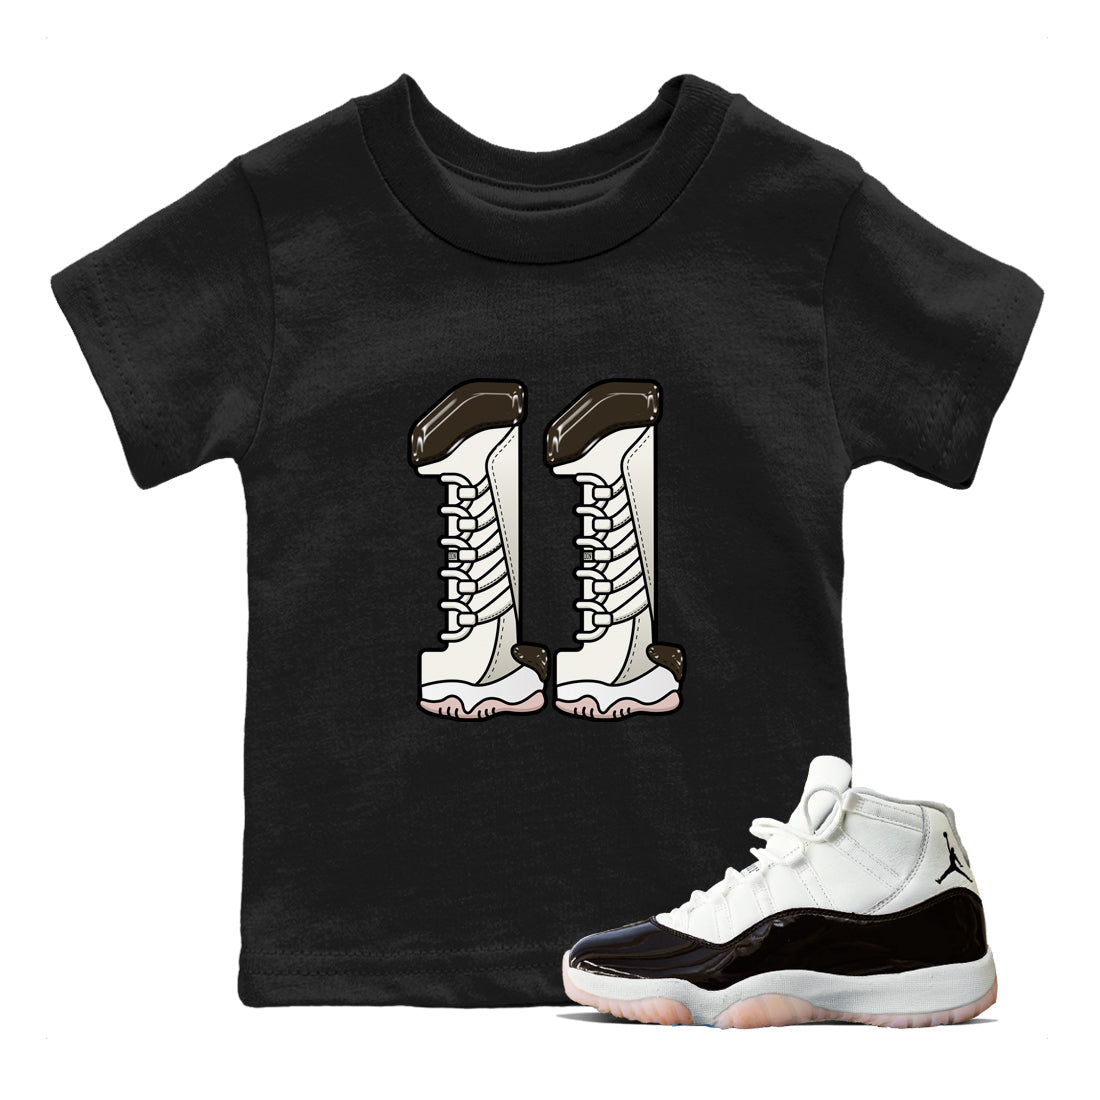 11s Neapolitan shirt to match jordans Number 11 sneaker tees Air Jordan 11 Neapolitan SNRT Sneaker Release Tees Baby Toddler Black 1 T-Shirt